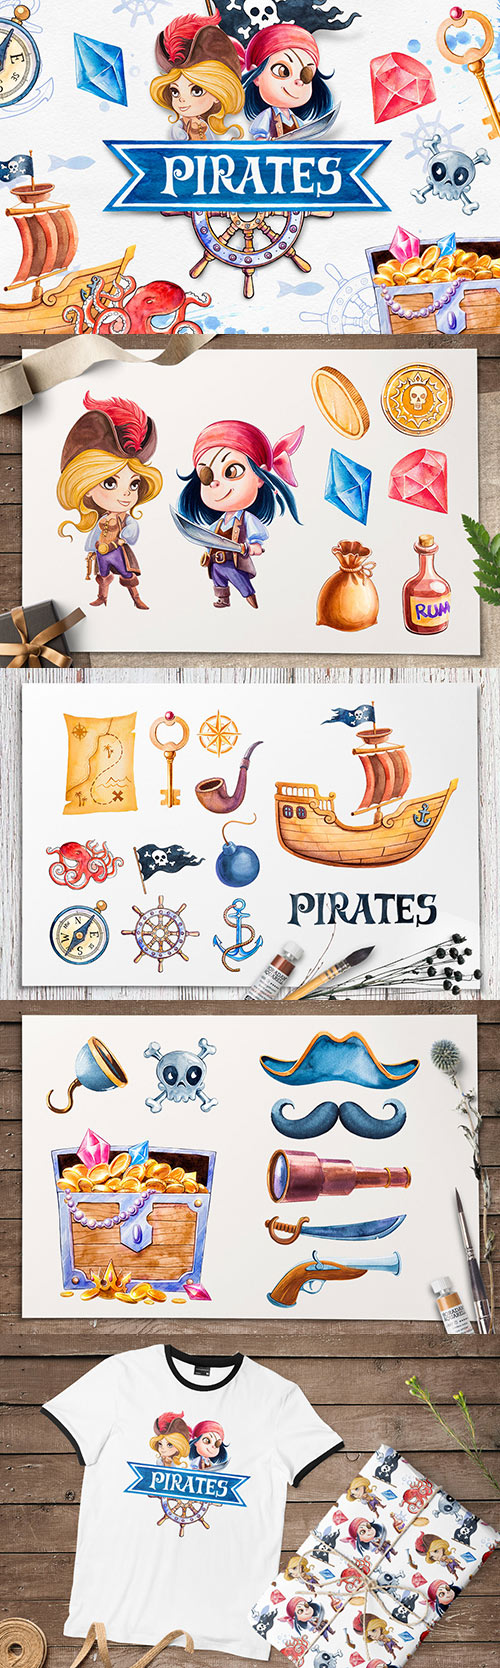 Pirates Watercolor illustrations